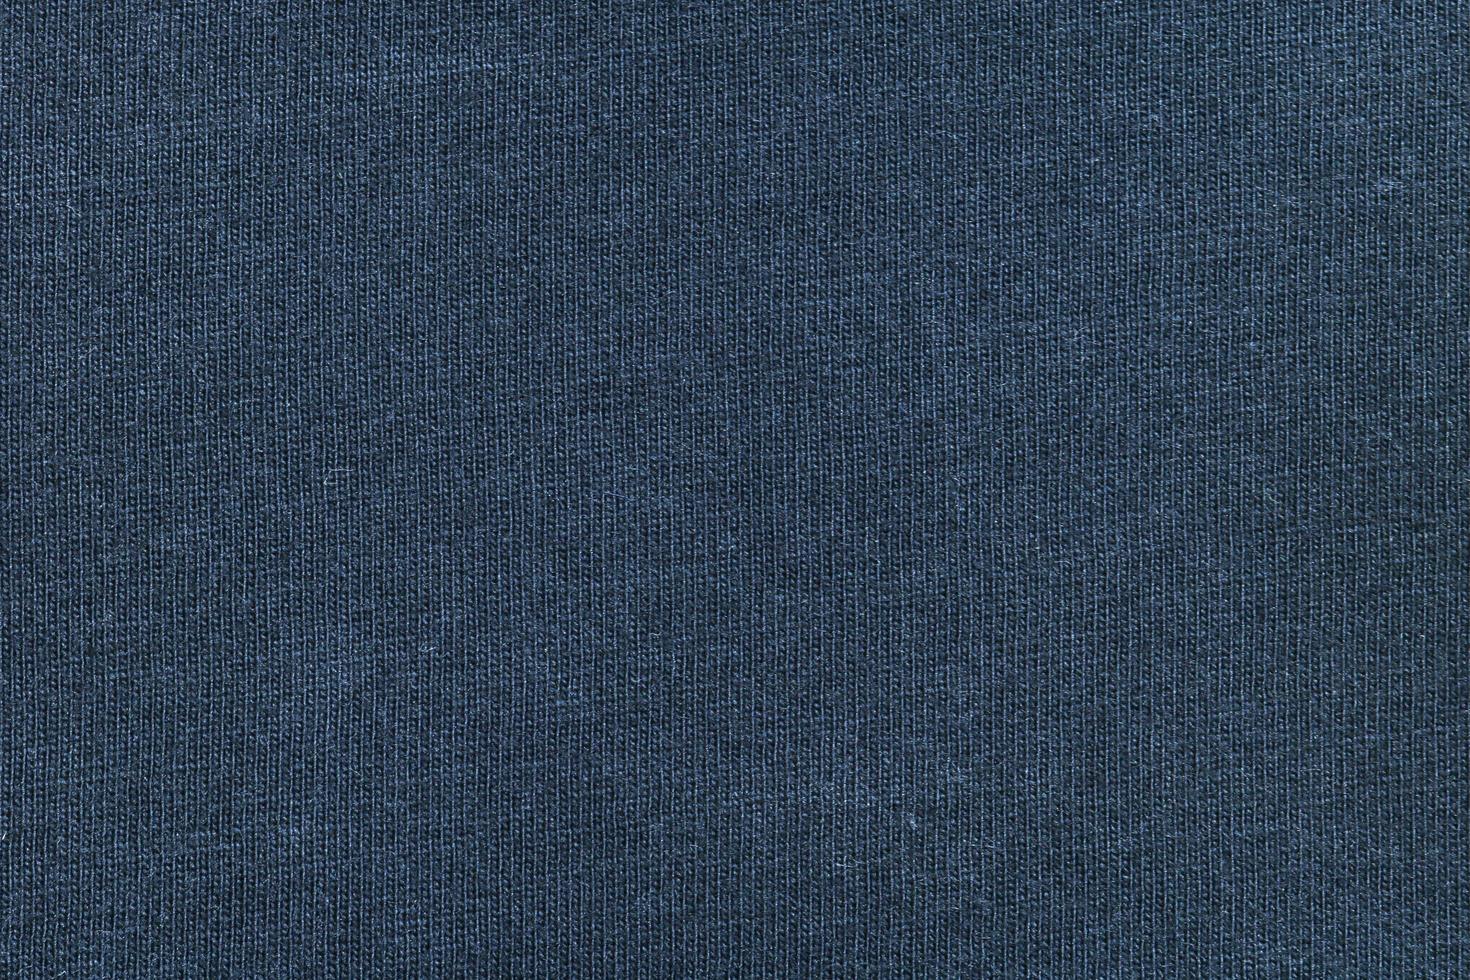 textura de tecido azul escuro close-up foto